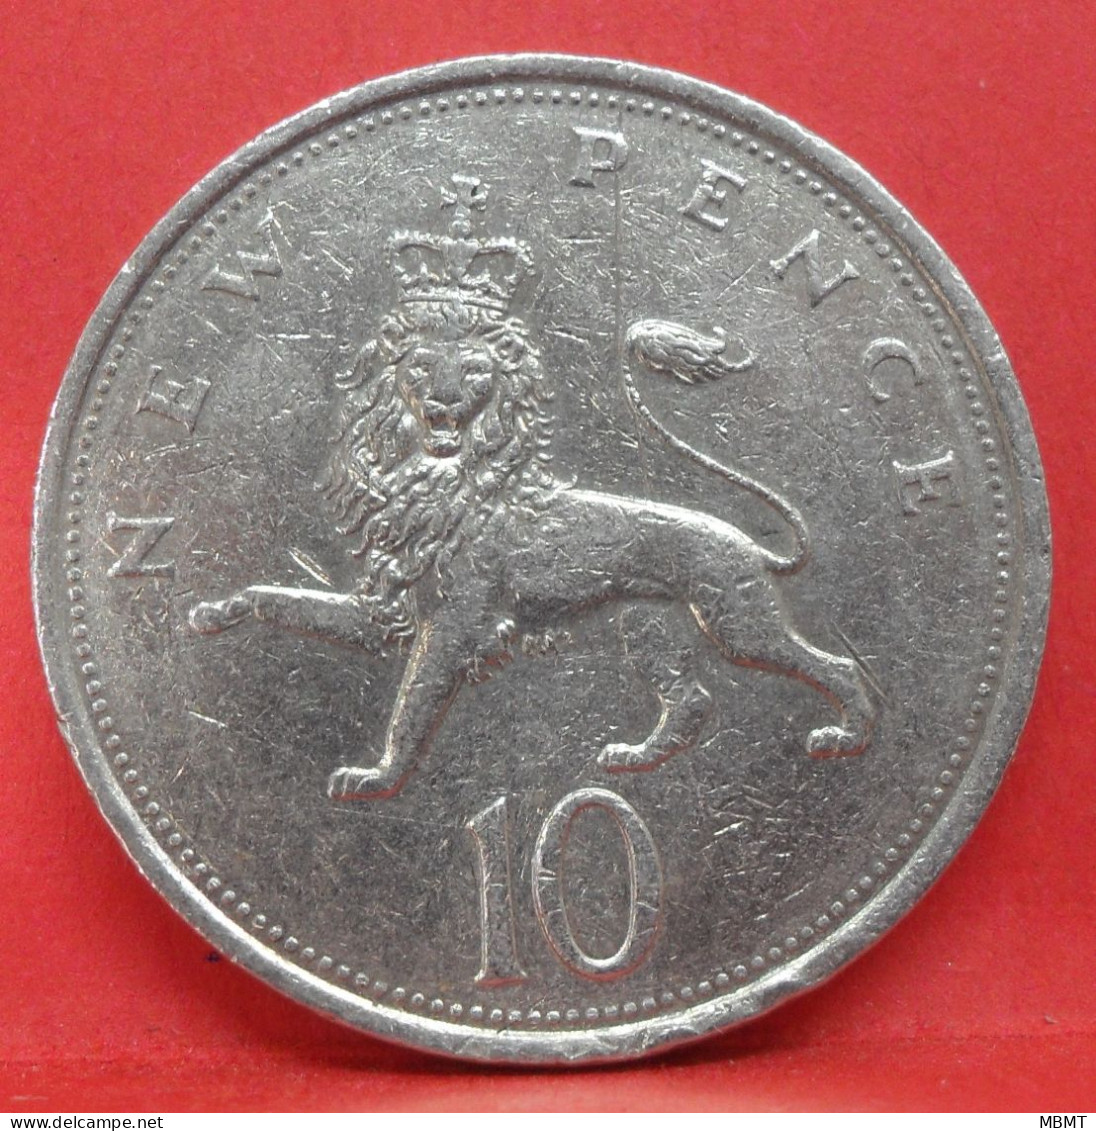 10 Pence 1980 - TB - Pièce Monnaie Grande-Bretagne - Article N°2825 - 10 Pence & 10 New Pence